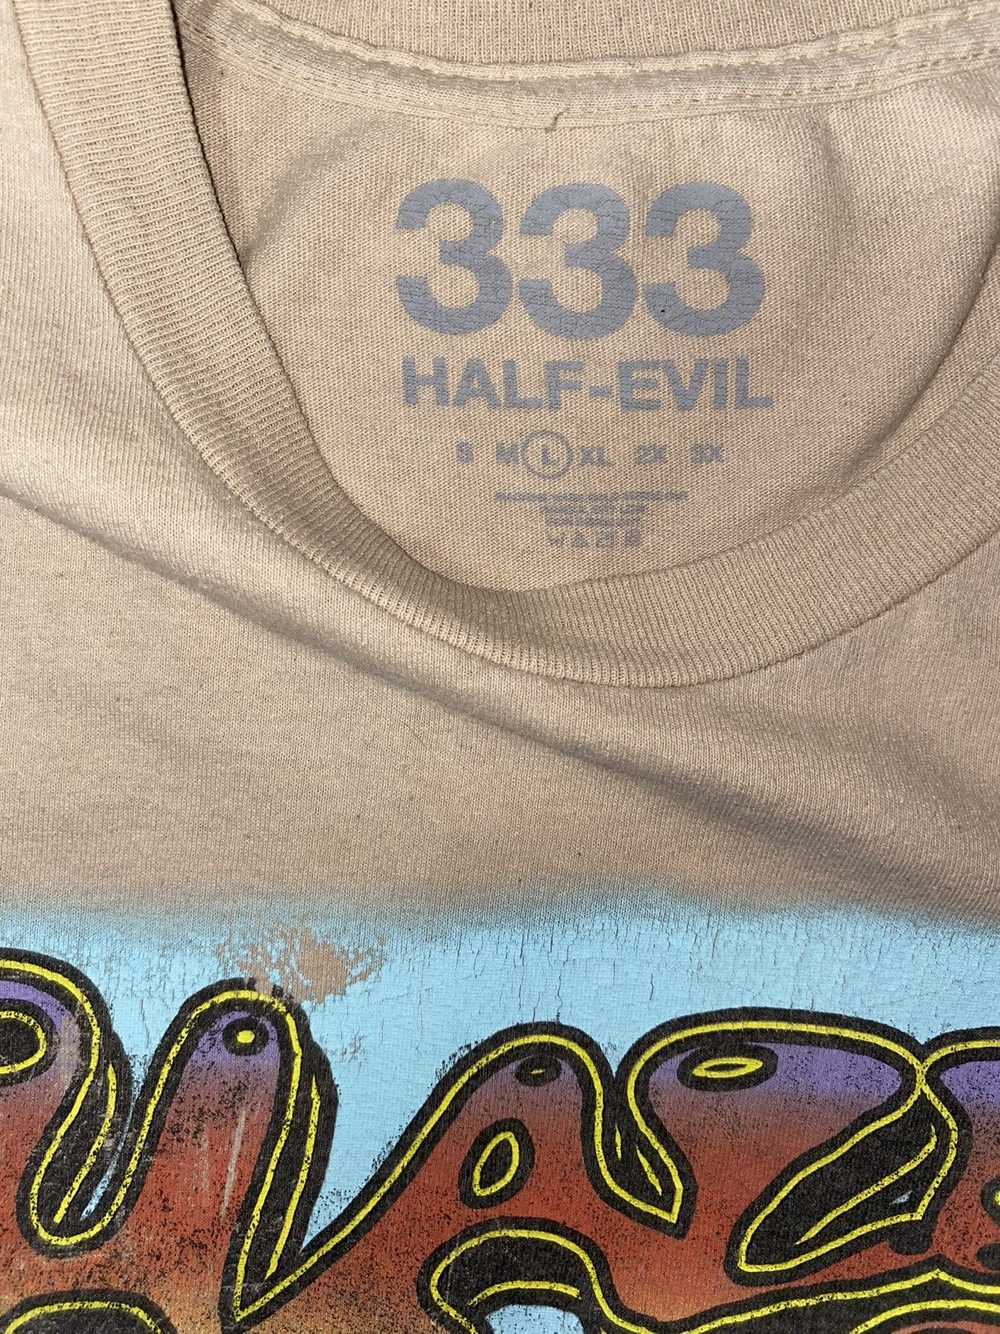 Half Evil Half Evil T shirt - image 4